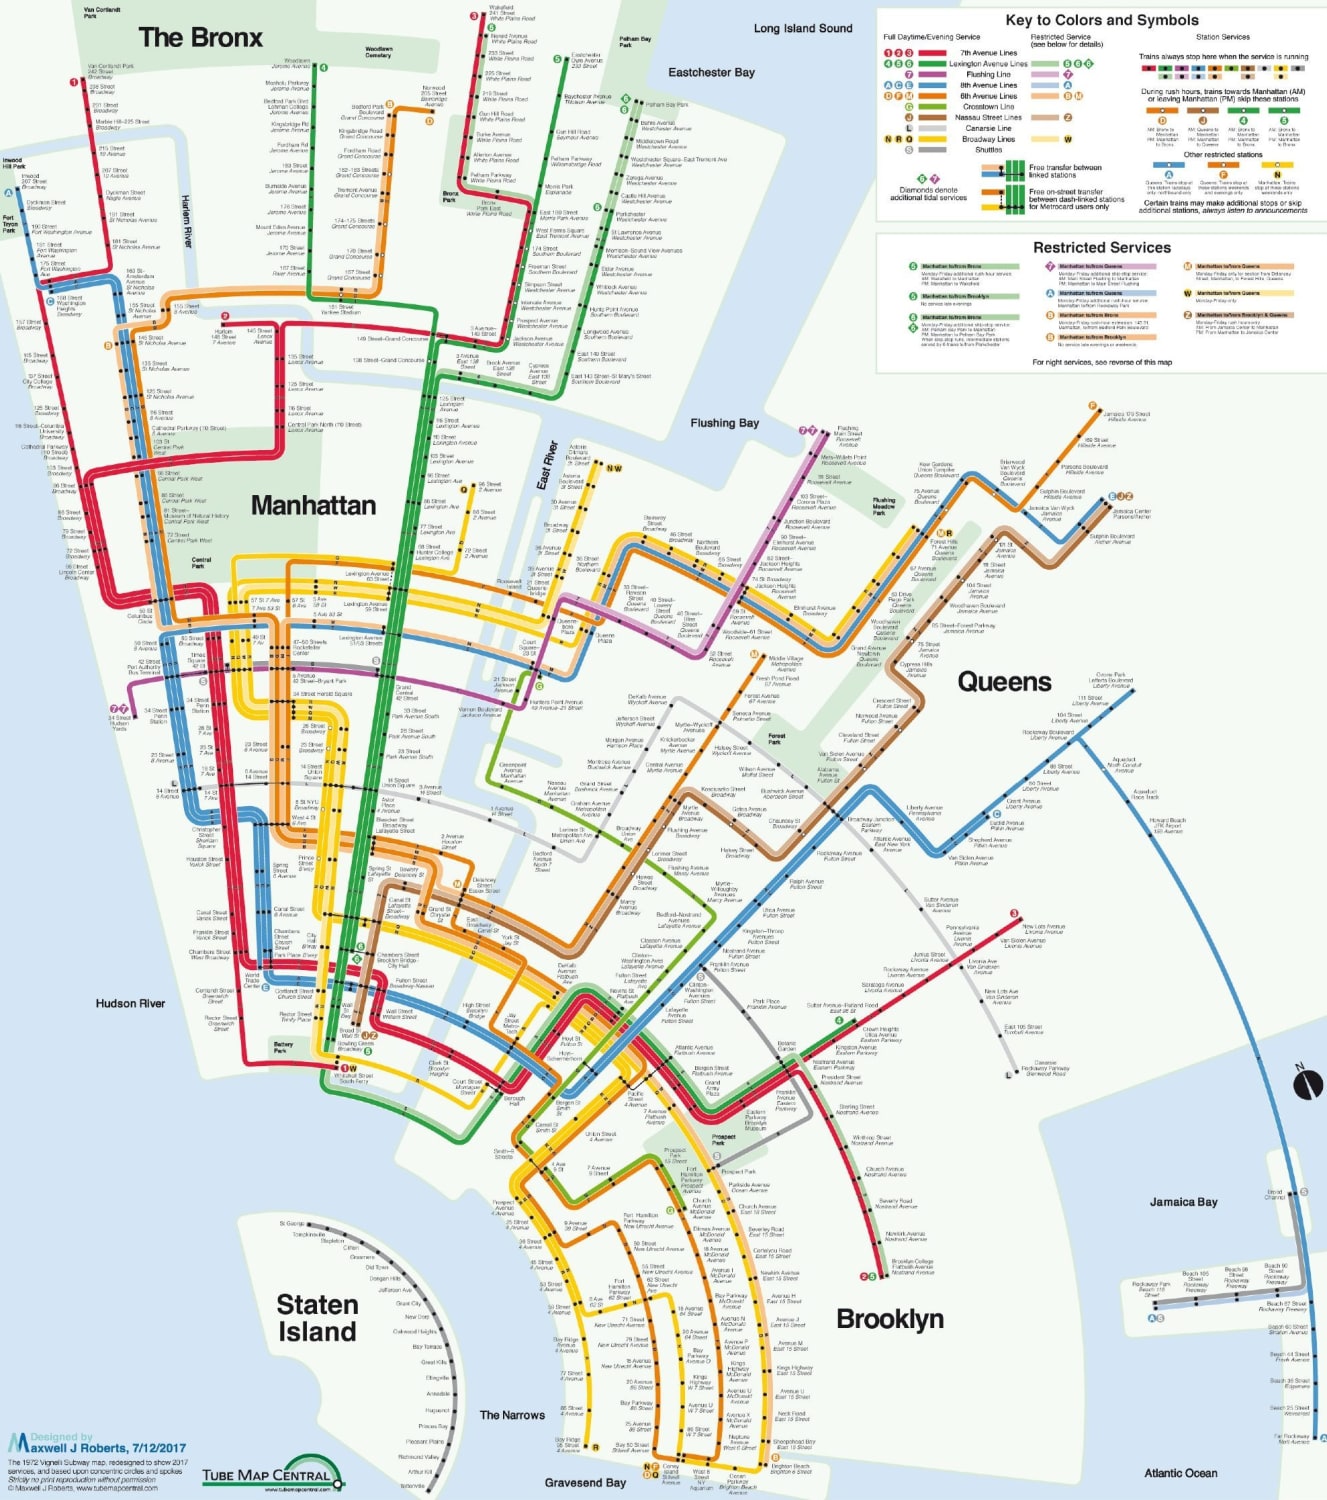 Simplified NYC metro lines